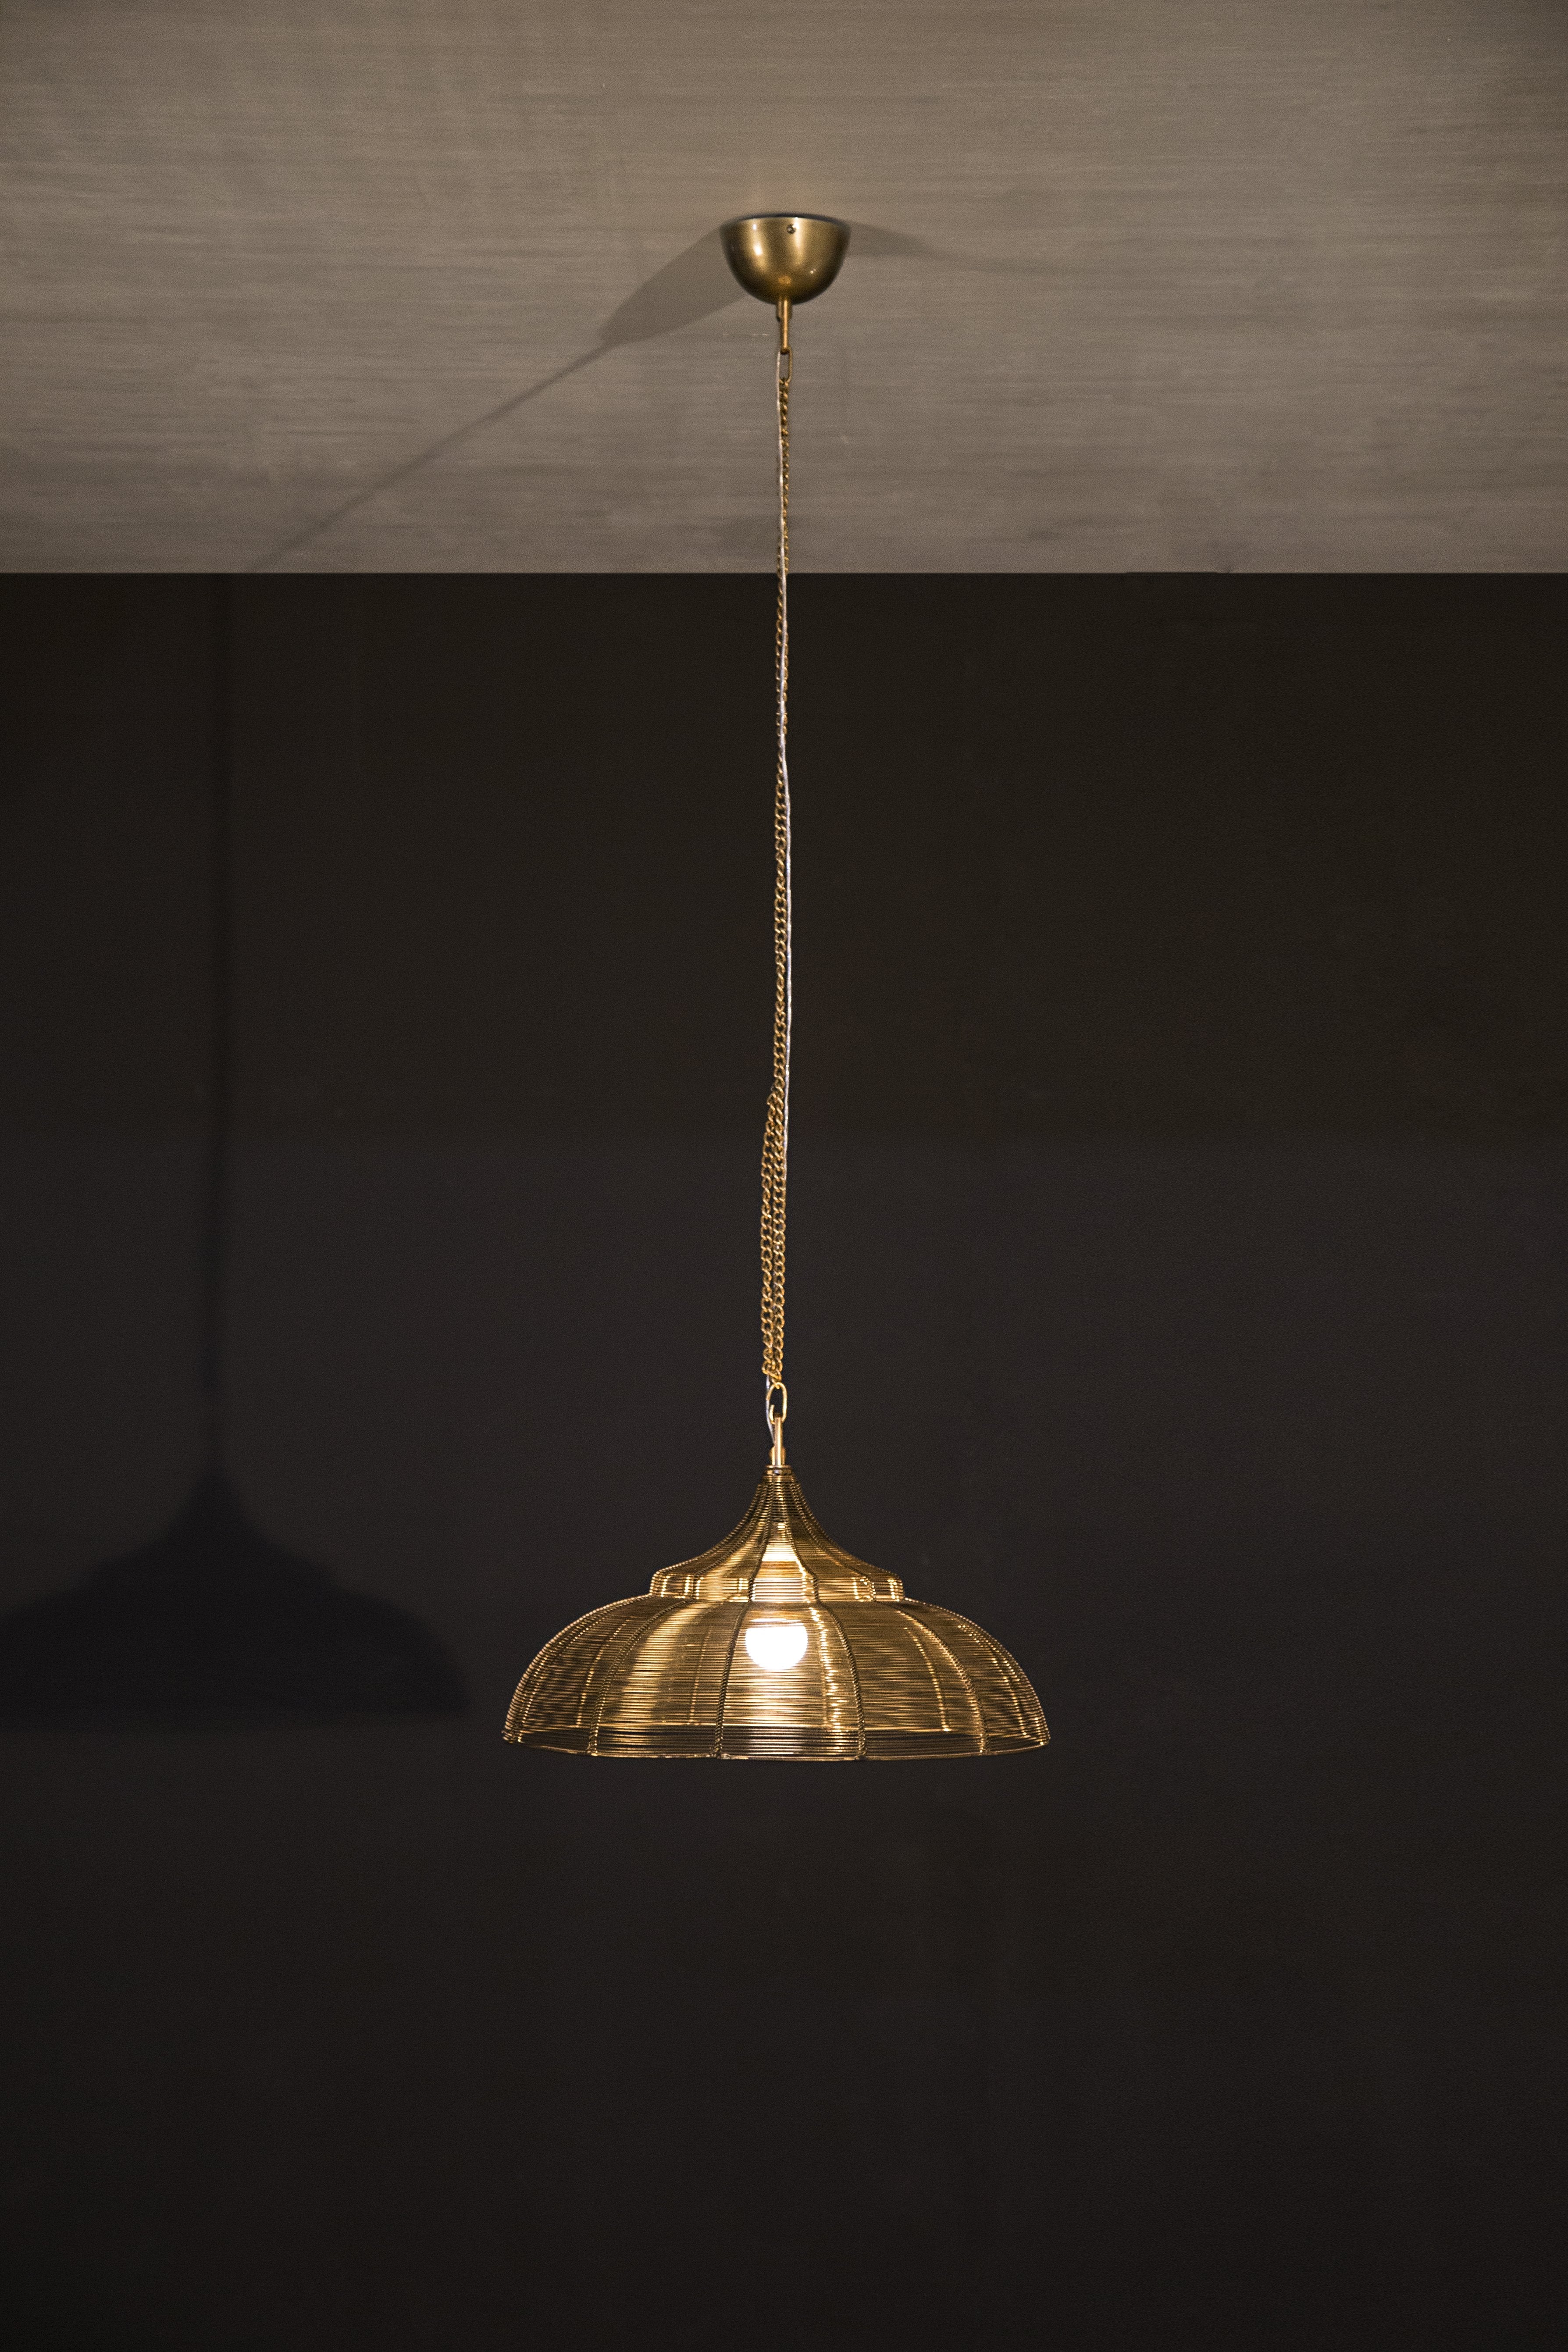 Kainoosh hanging pendant lamp wire lamp lighting, ceiling lamp, decoration, handmade, crafted, vintage